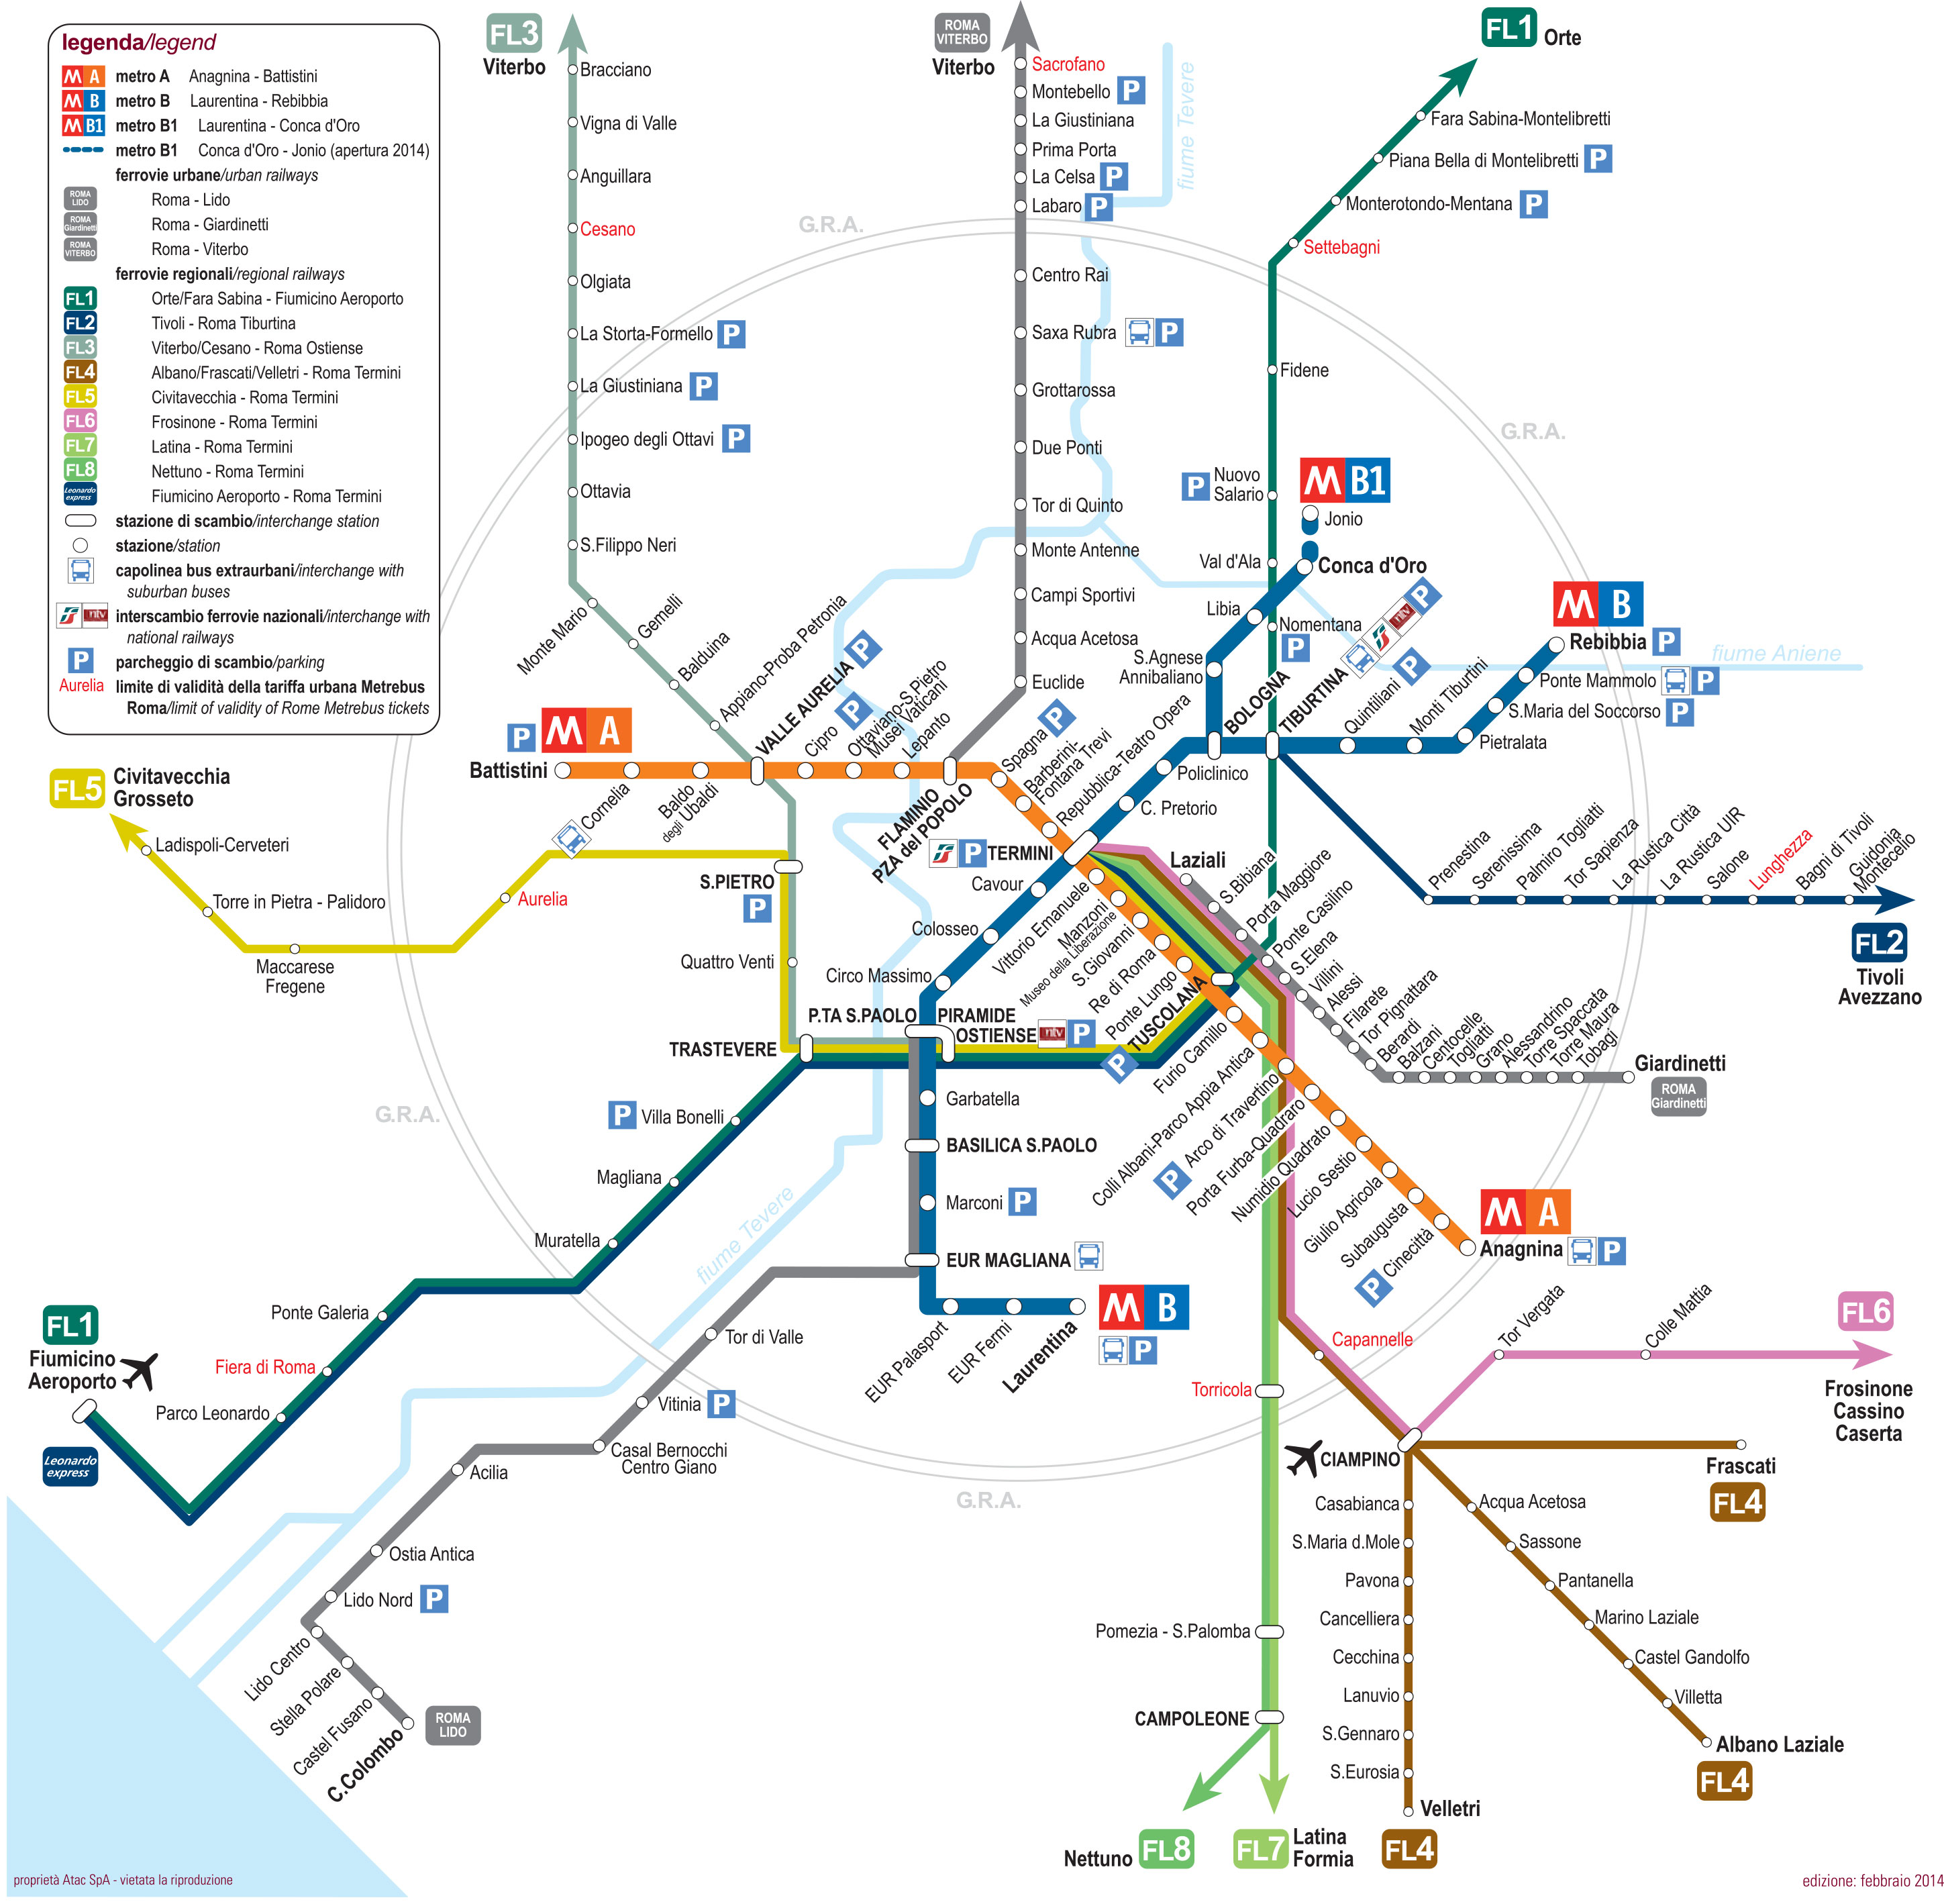 map-of-rome-subway-underground-tube-metropolitana-stations-lines